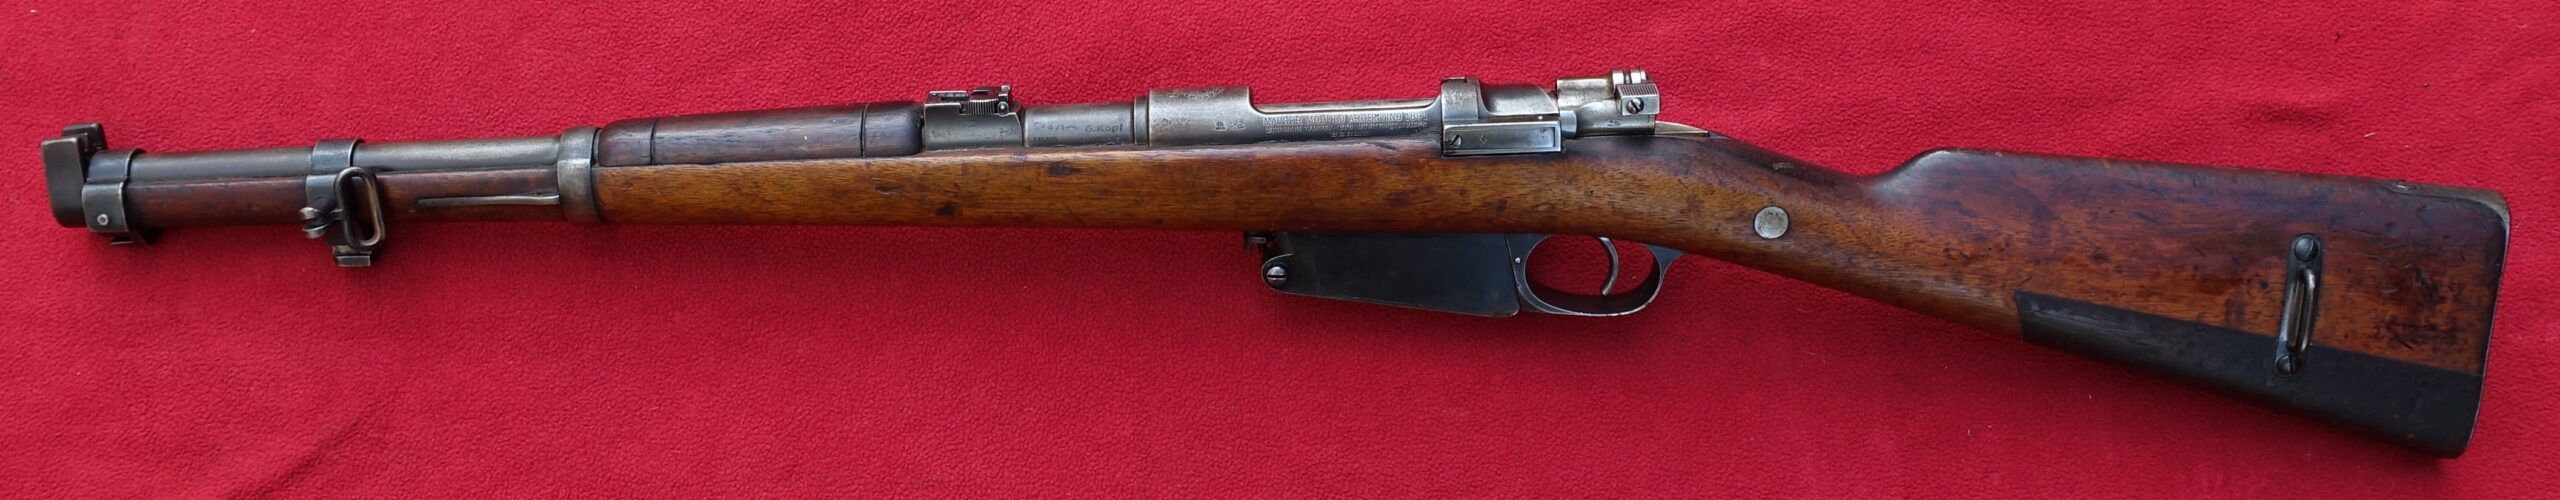 Puška Argentinský Mauser M.1891 - karabina pro technické sbo